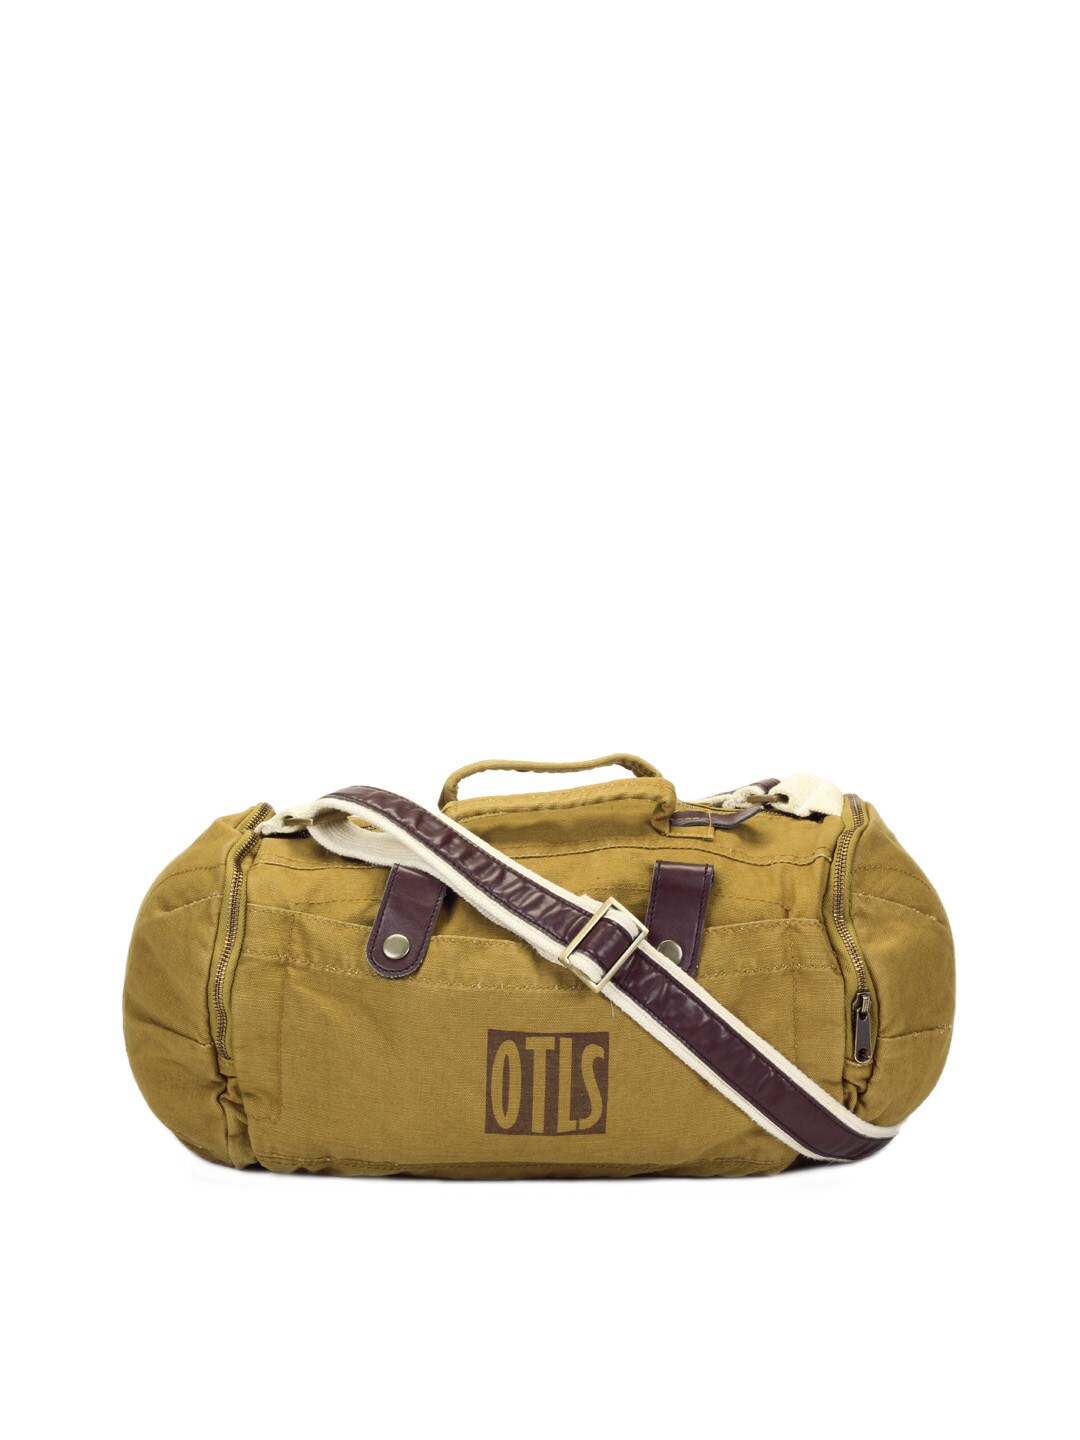 OTLS Unisex Mustard Brown Duffle Bag